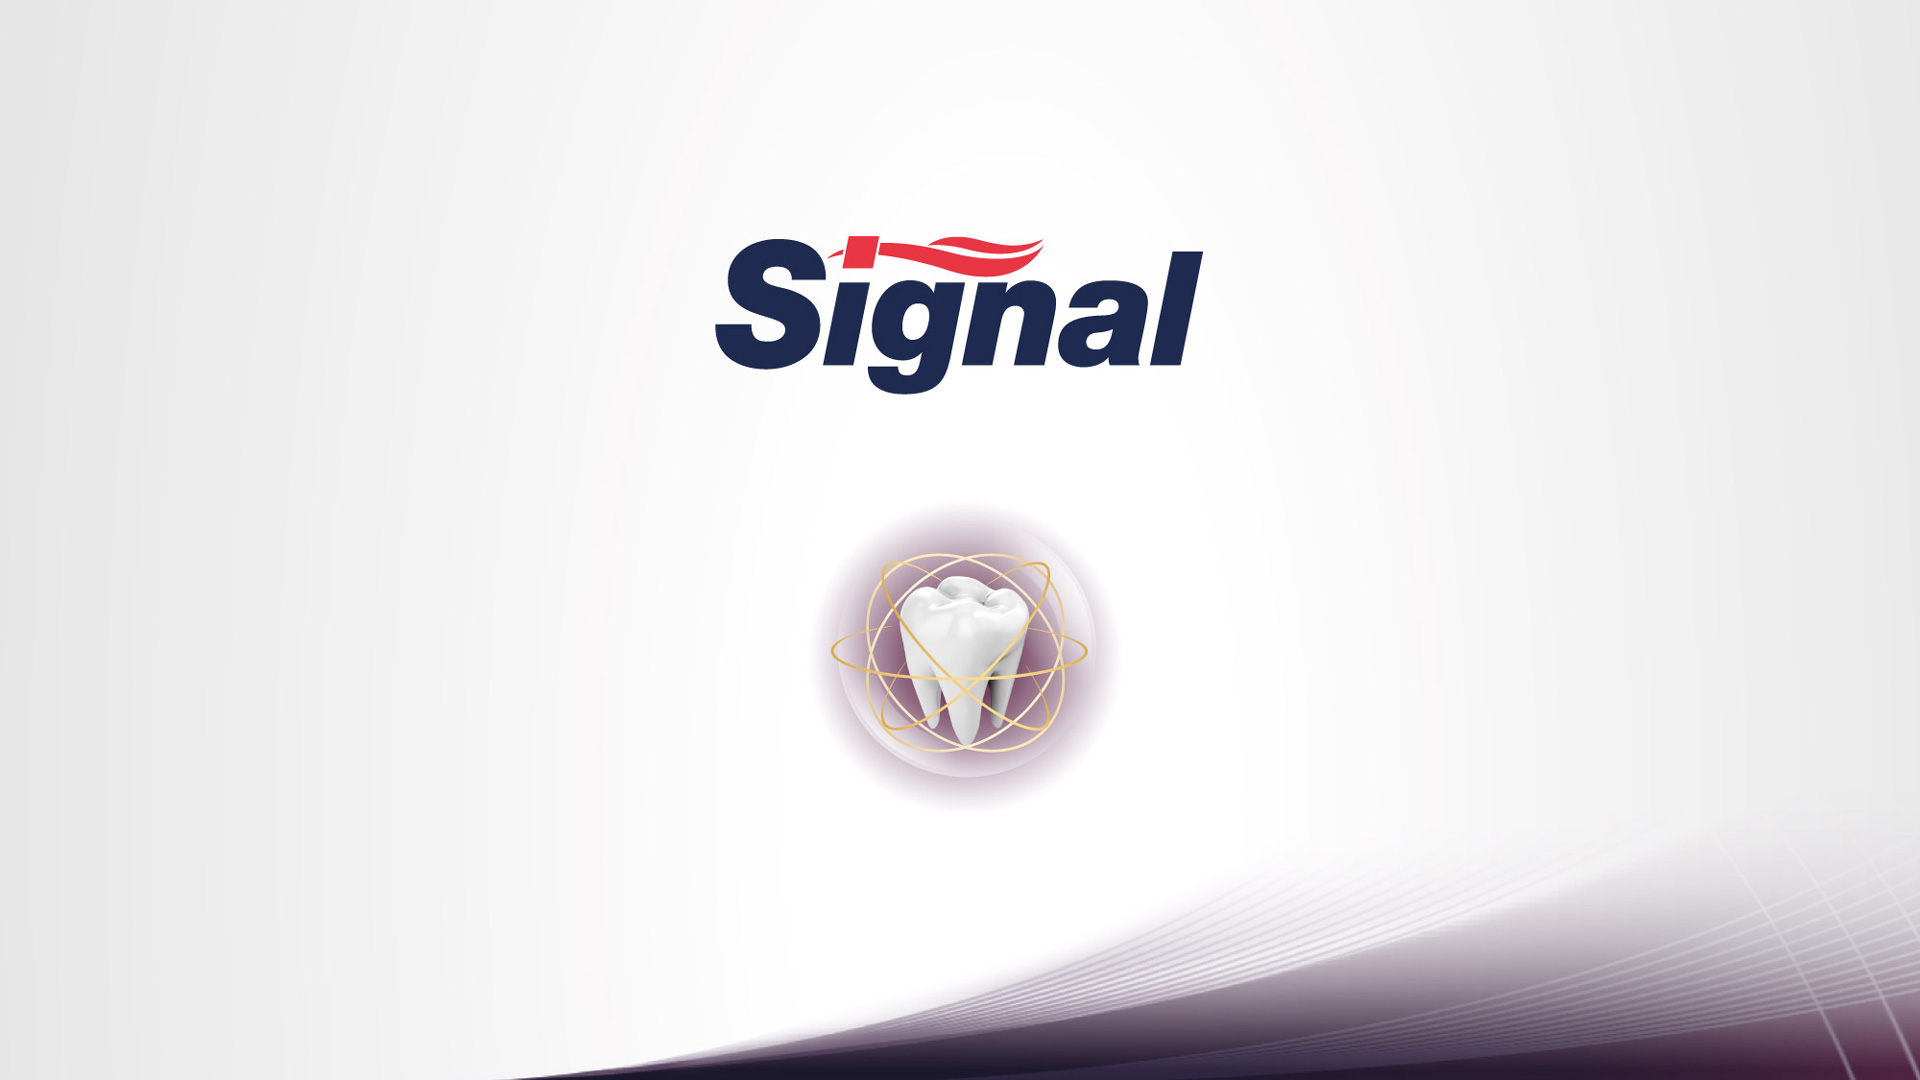 Signal Integral 8 Resist+